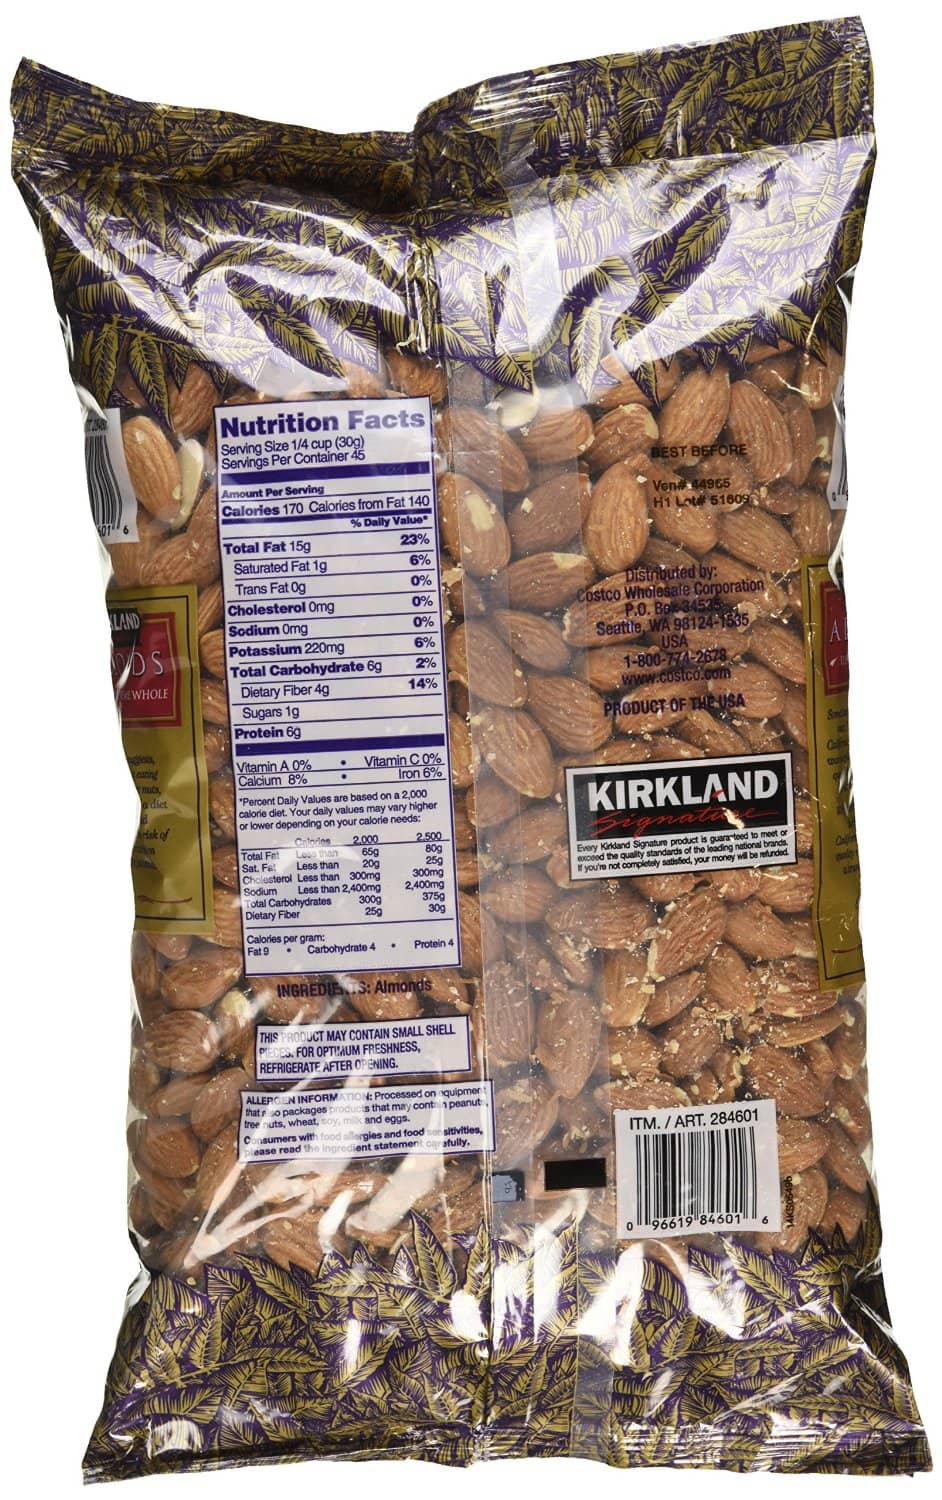 Hanh-nhan-Kirkland-Almonds-136kg-mat-sau